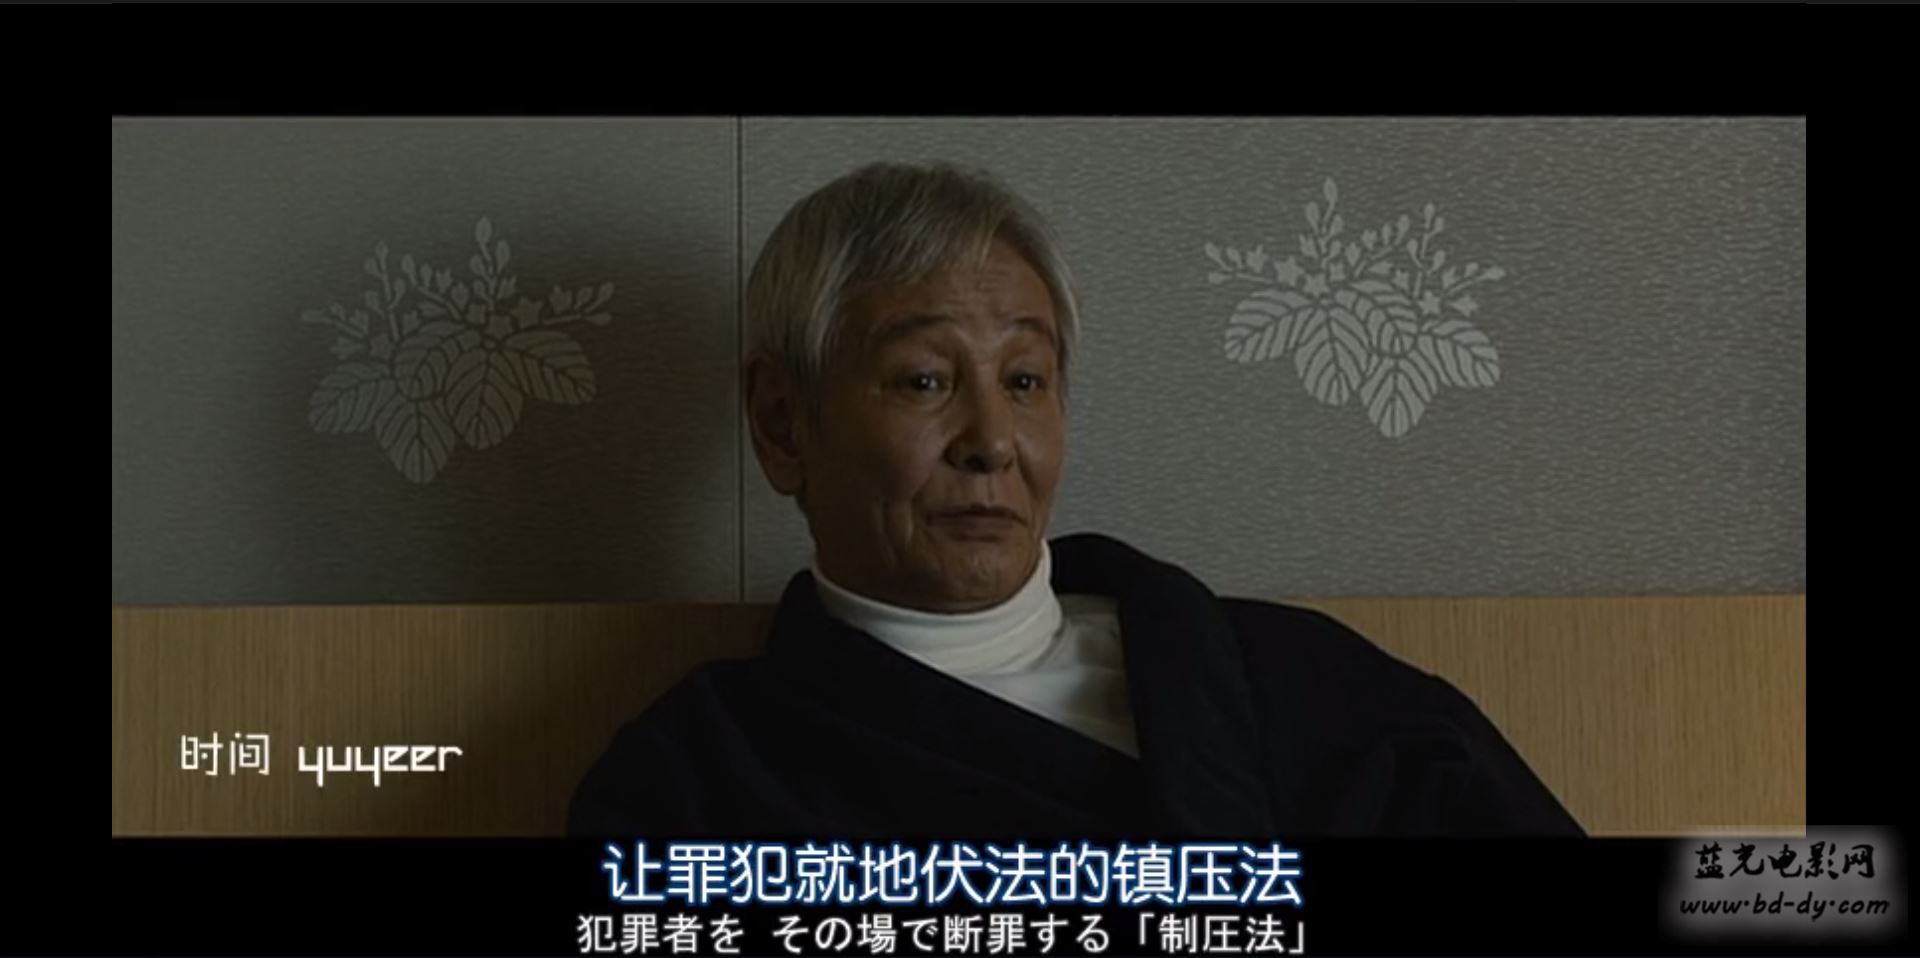 《S-最后的警官 电影版》2015日本动作犯罪.DVD.中日双字截图;jsessionid=senYRnoEiZZcD2dK9hIbOZ7H-qbSgfZ9jIgEawfO